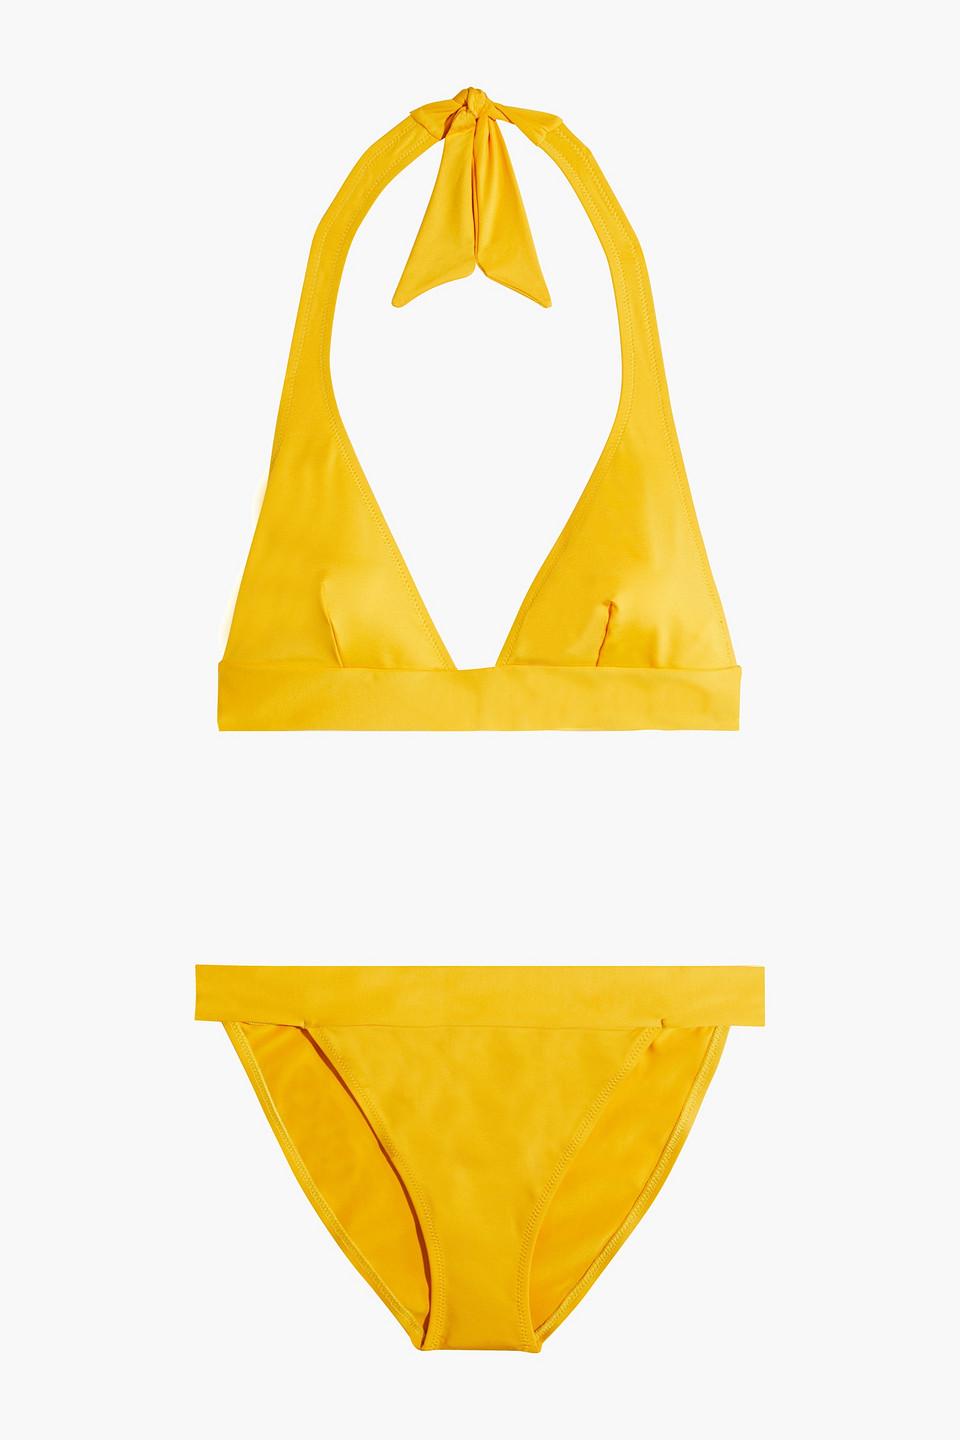 Iris & Ink Synthetic Elise Triangle Bikini in Marigold (Orange) | Lyst